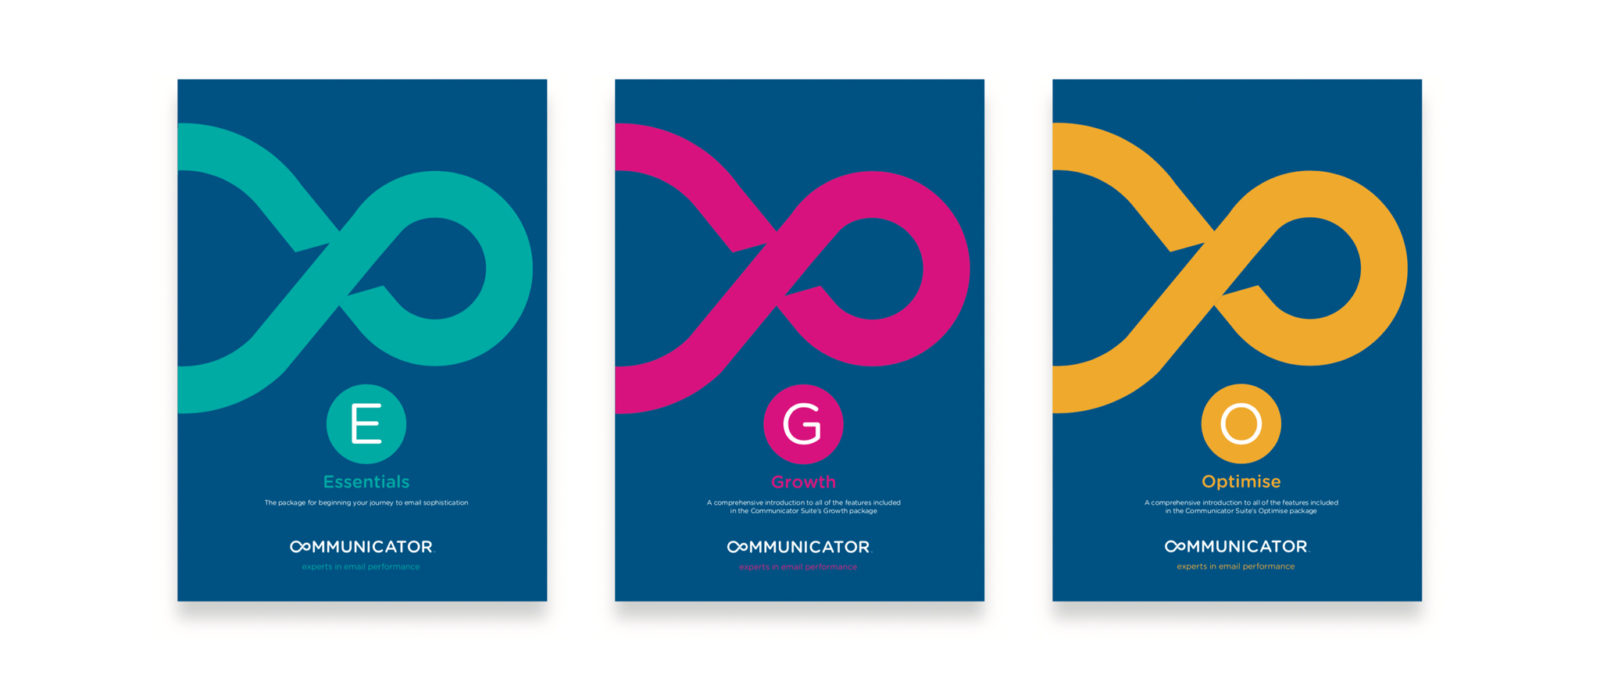 Communicator Campaign Brochure